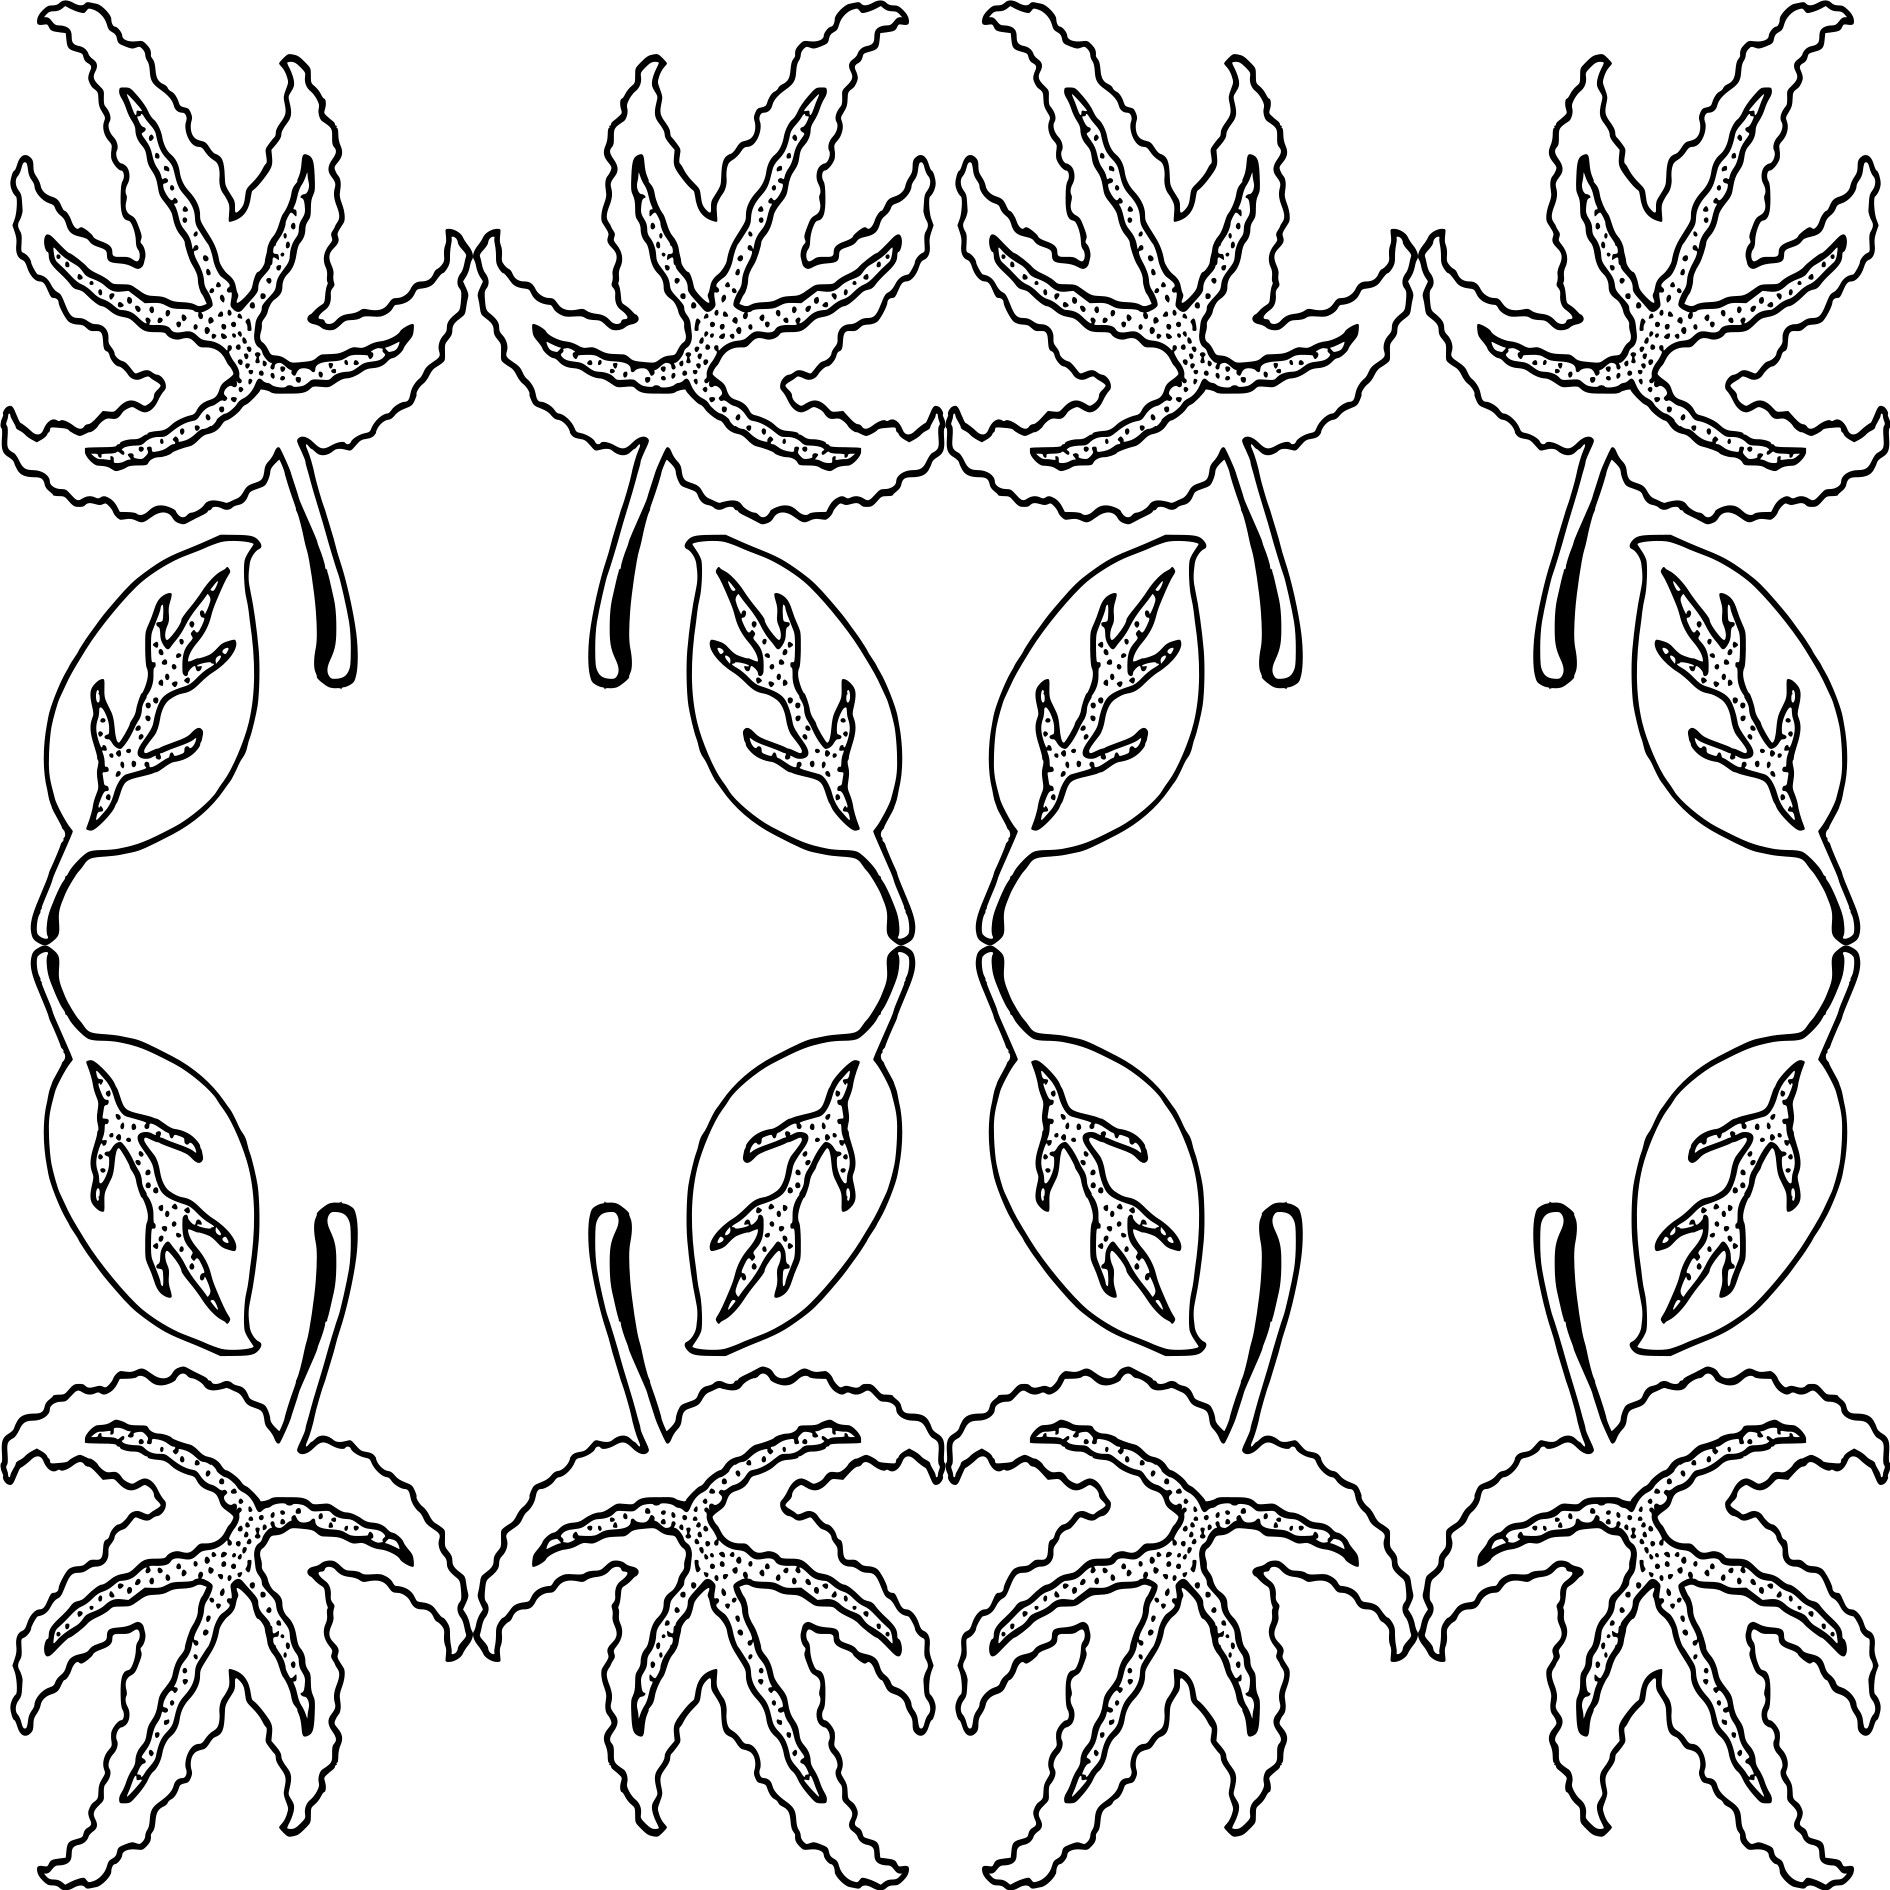 Foliage Leaf Pattern Design by Artist Sharon Godwin www.sgodwinstudio.co.uk